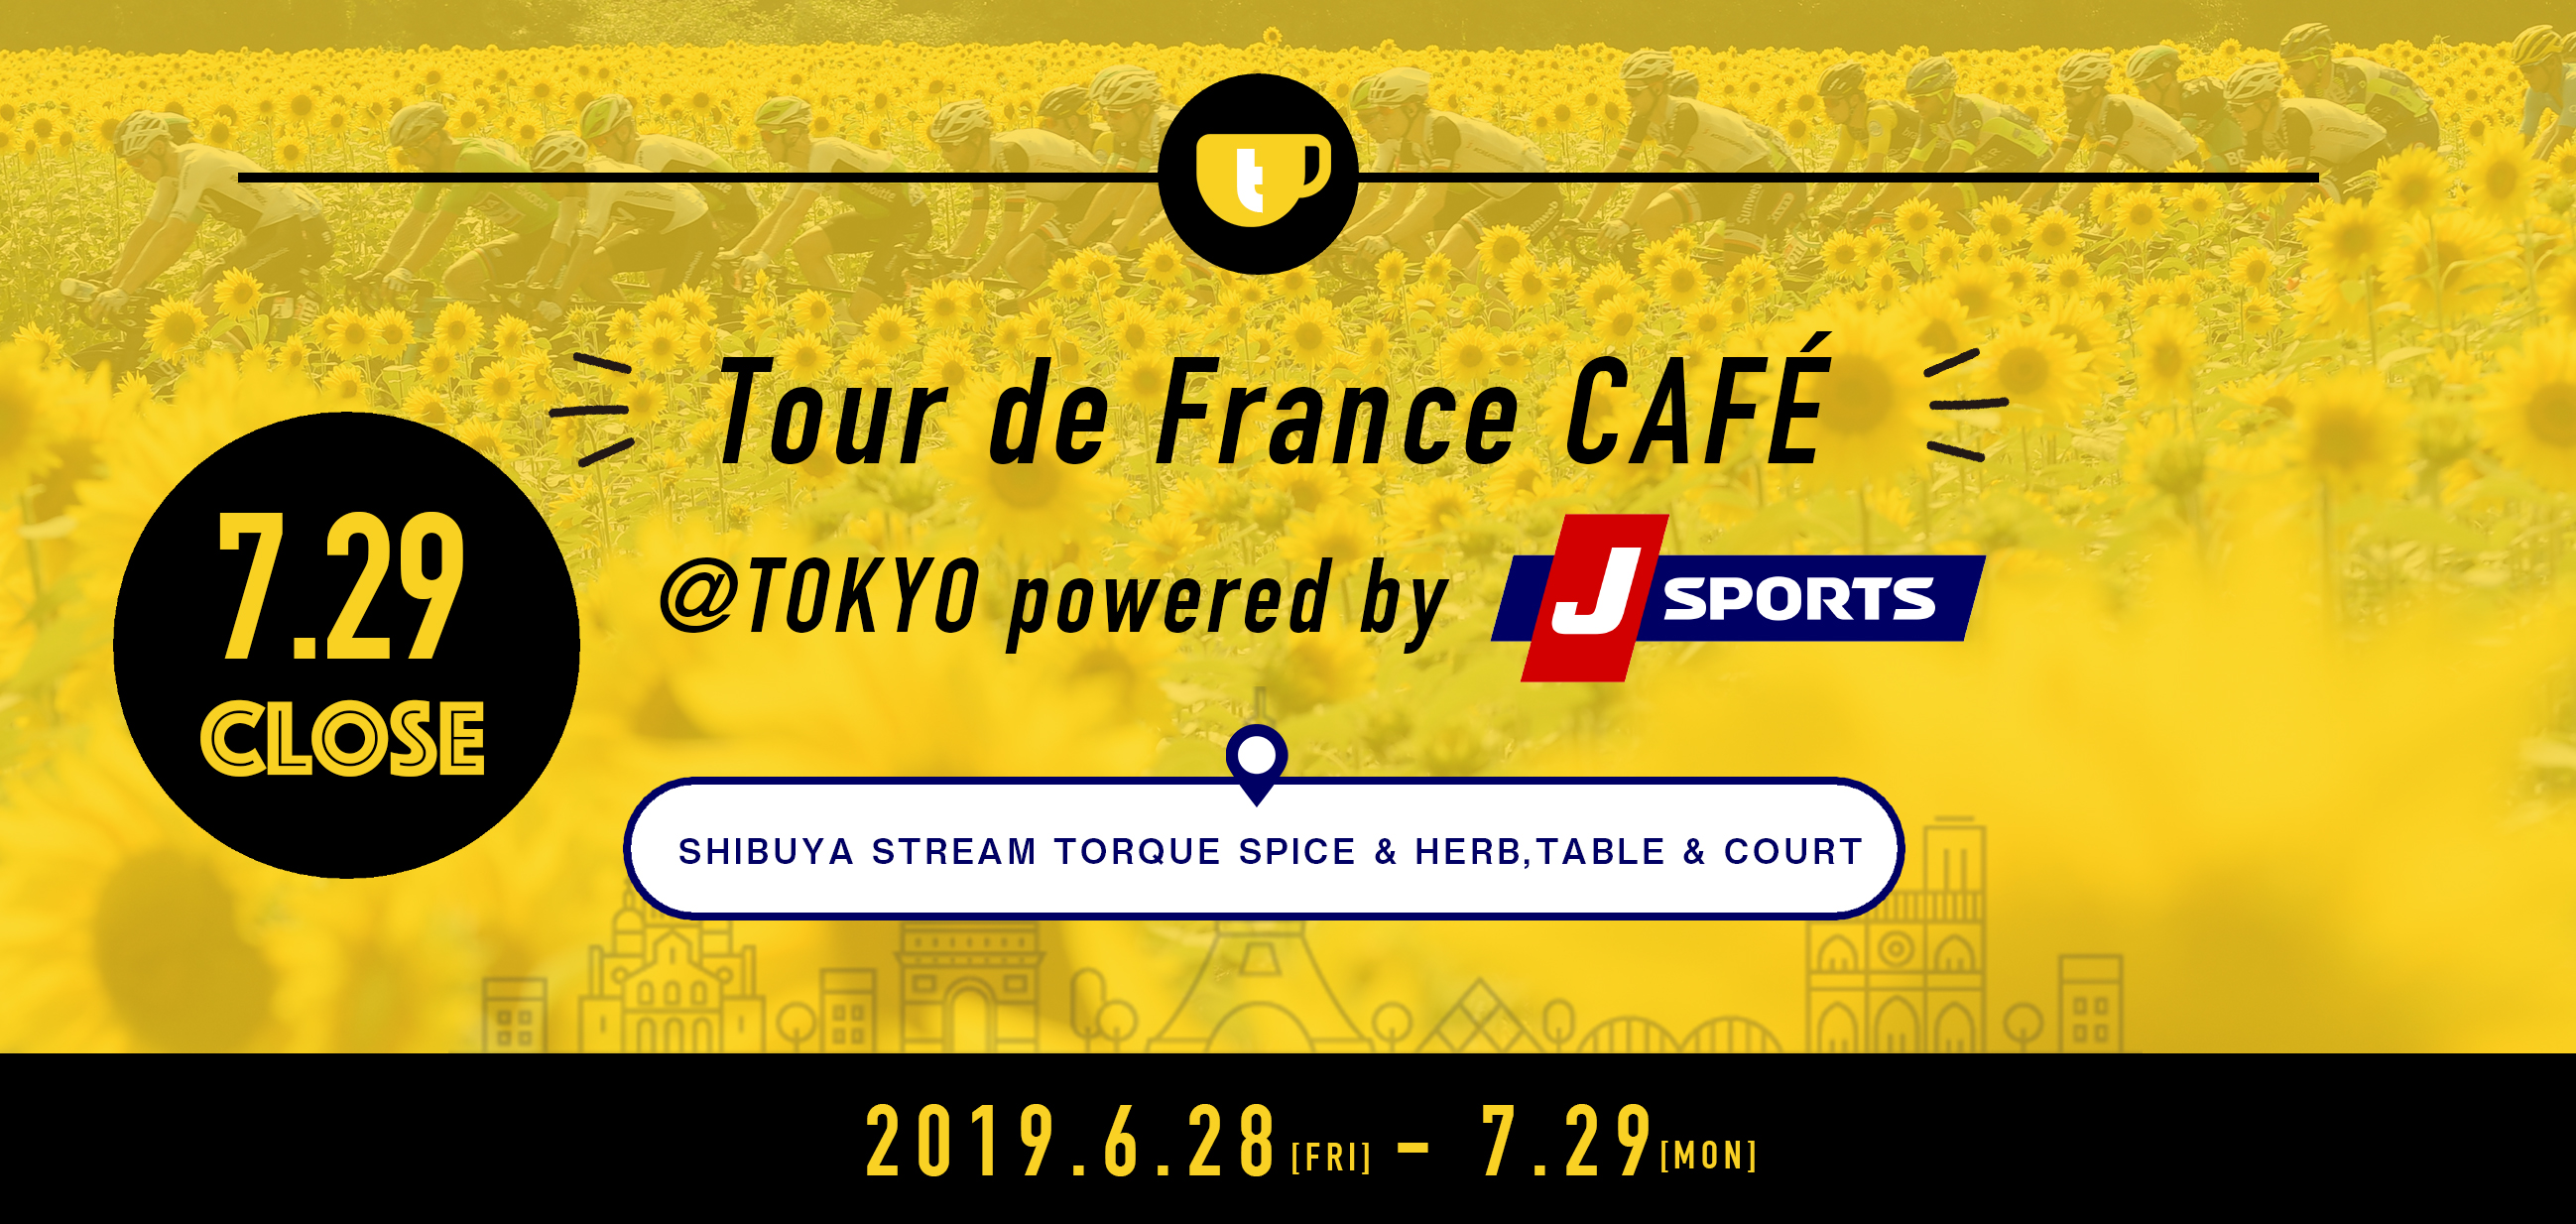 Tour De France Cafe Tokyo Powered By J Sports ツール ド フランス サイクルロードレース J Sports 公式